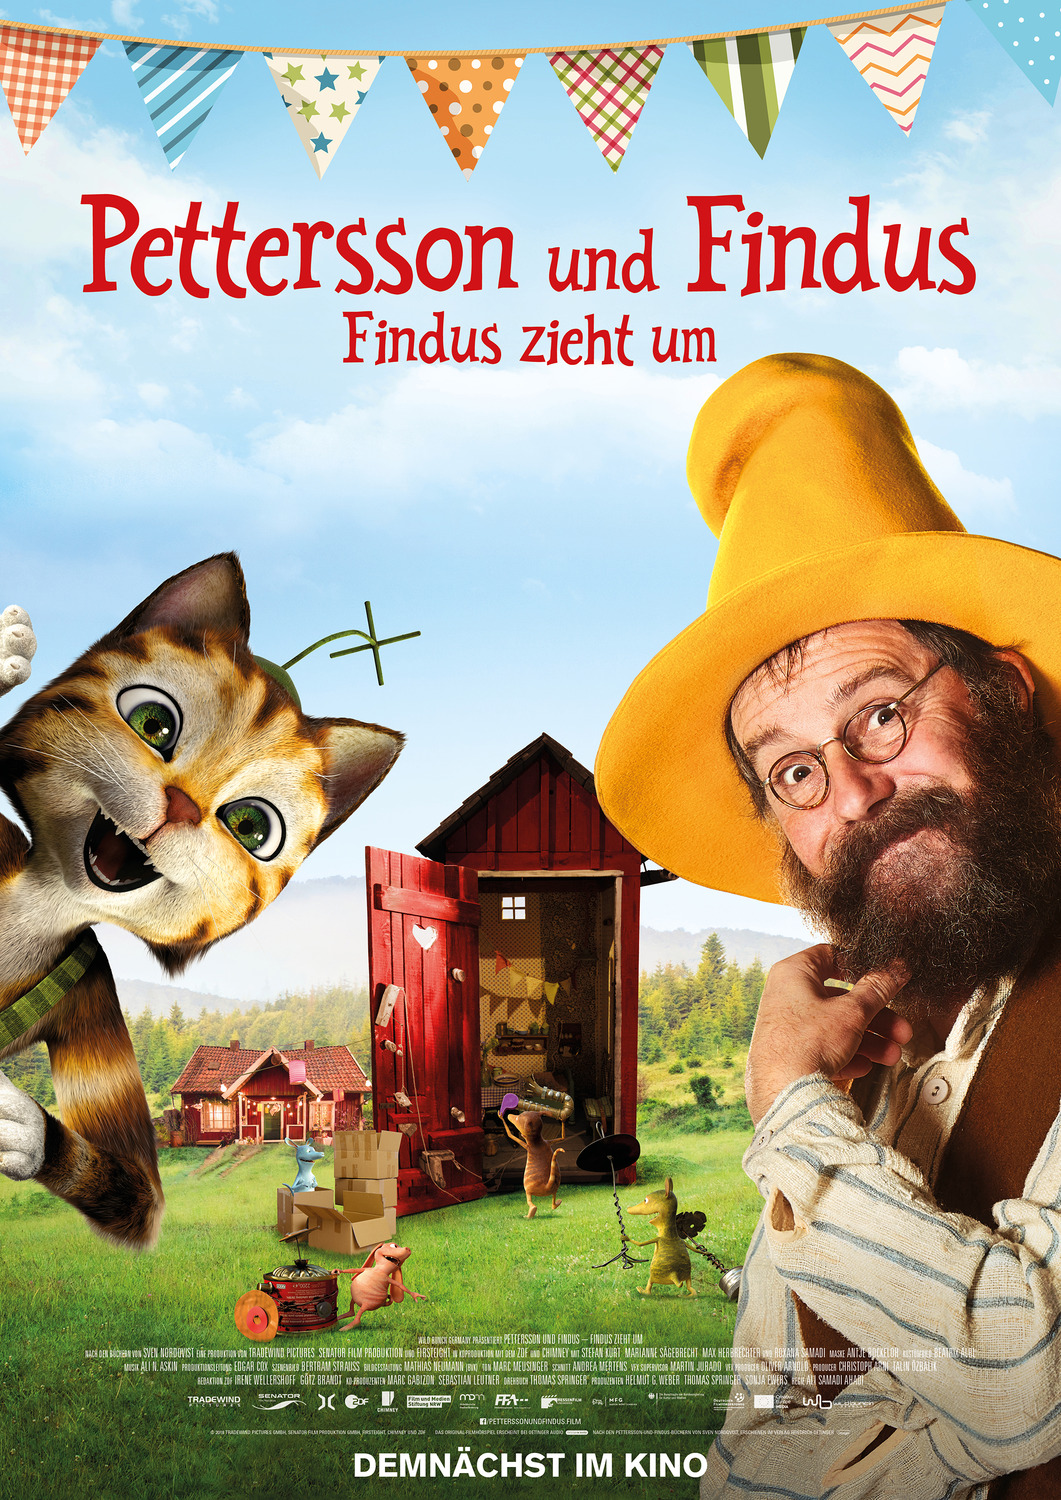 Extra Large Movie Poster Image for Pettersson und Findus - Findus zieht um (#2 of 2)